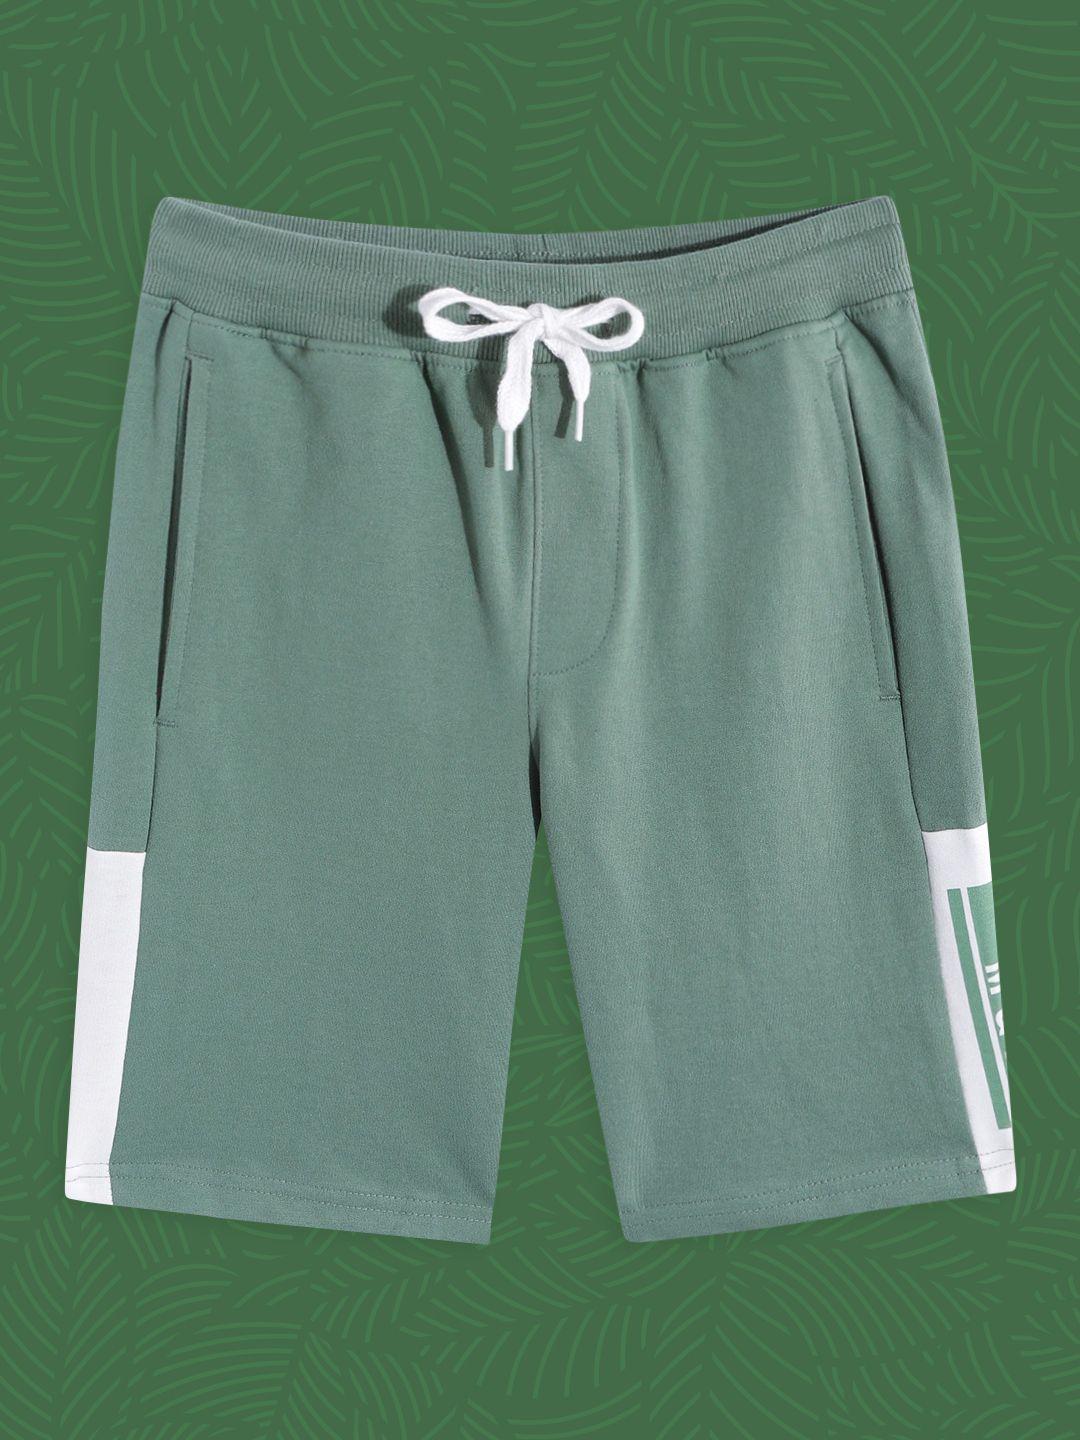 m&h juniors boys sage green solid shorts